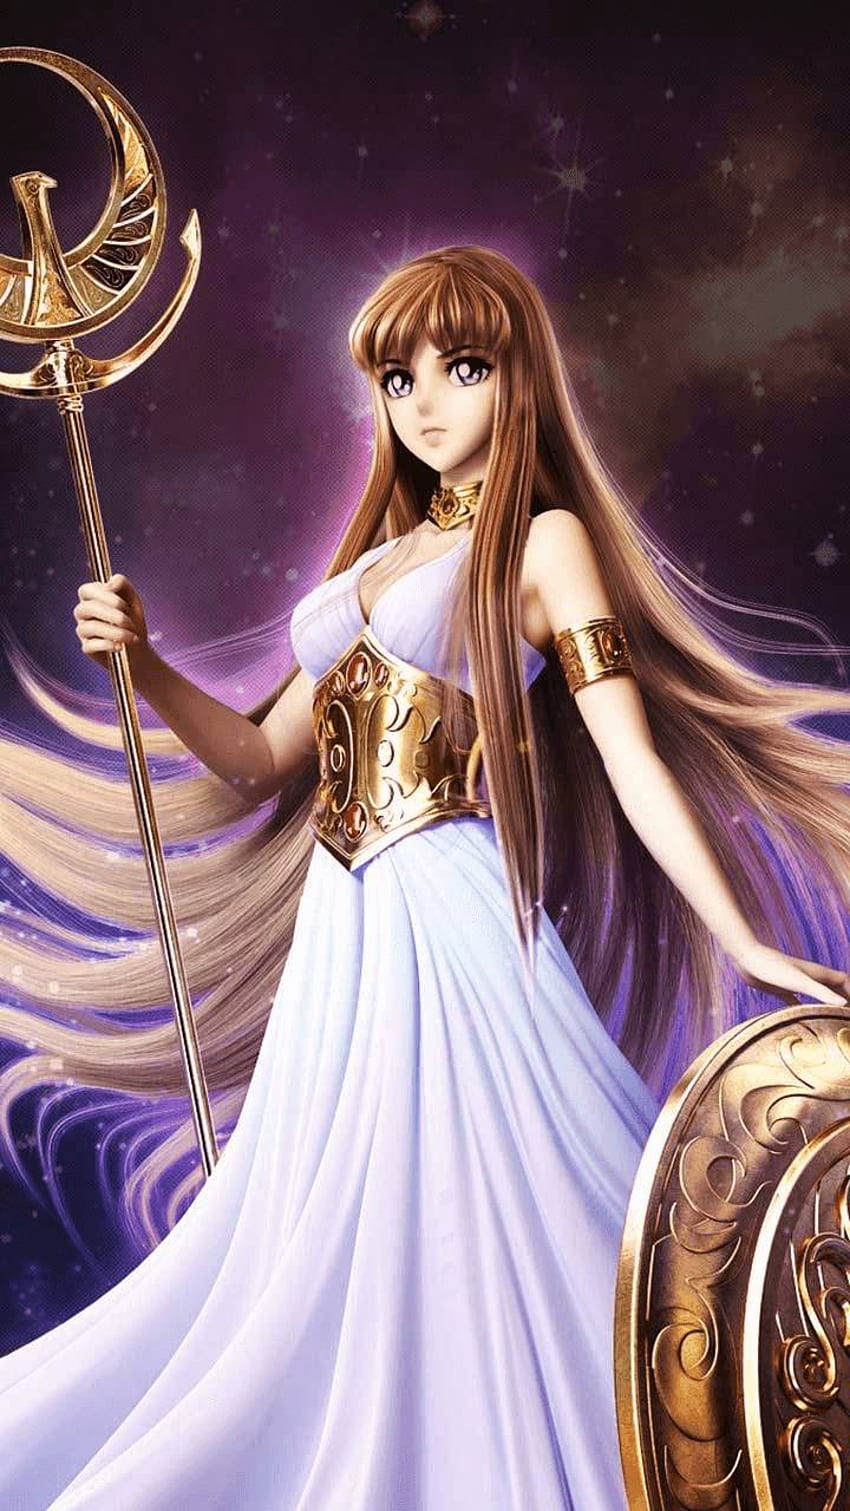 Goddess Athena by HelenStar on DeviantArt